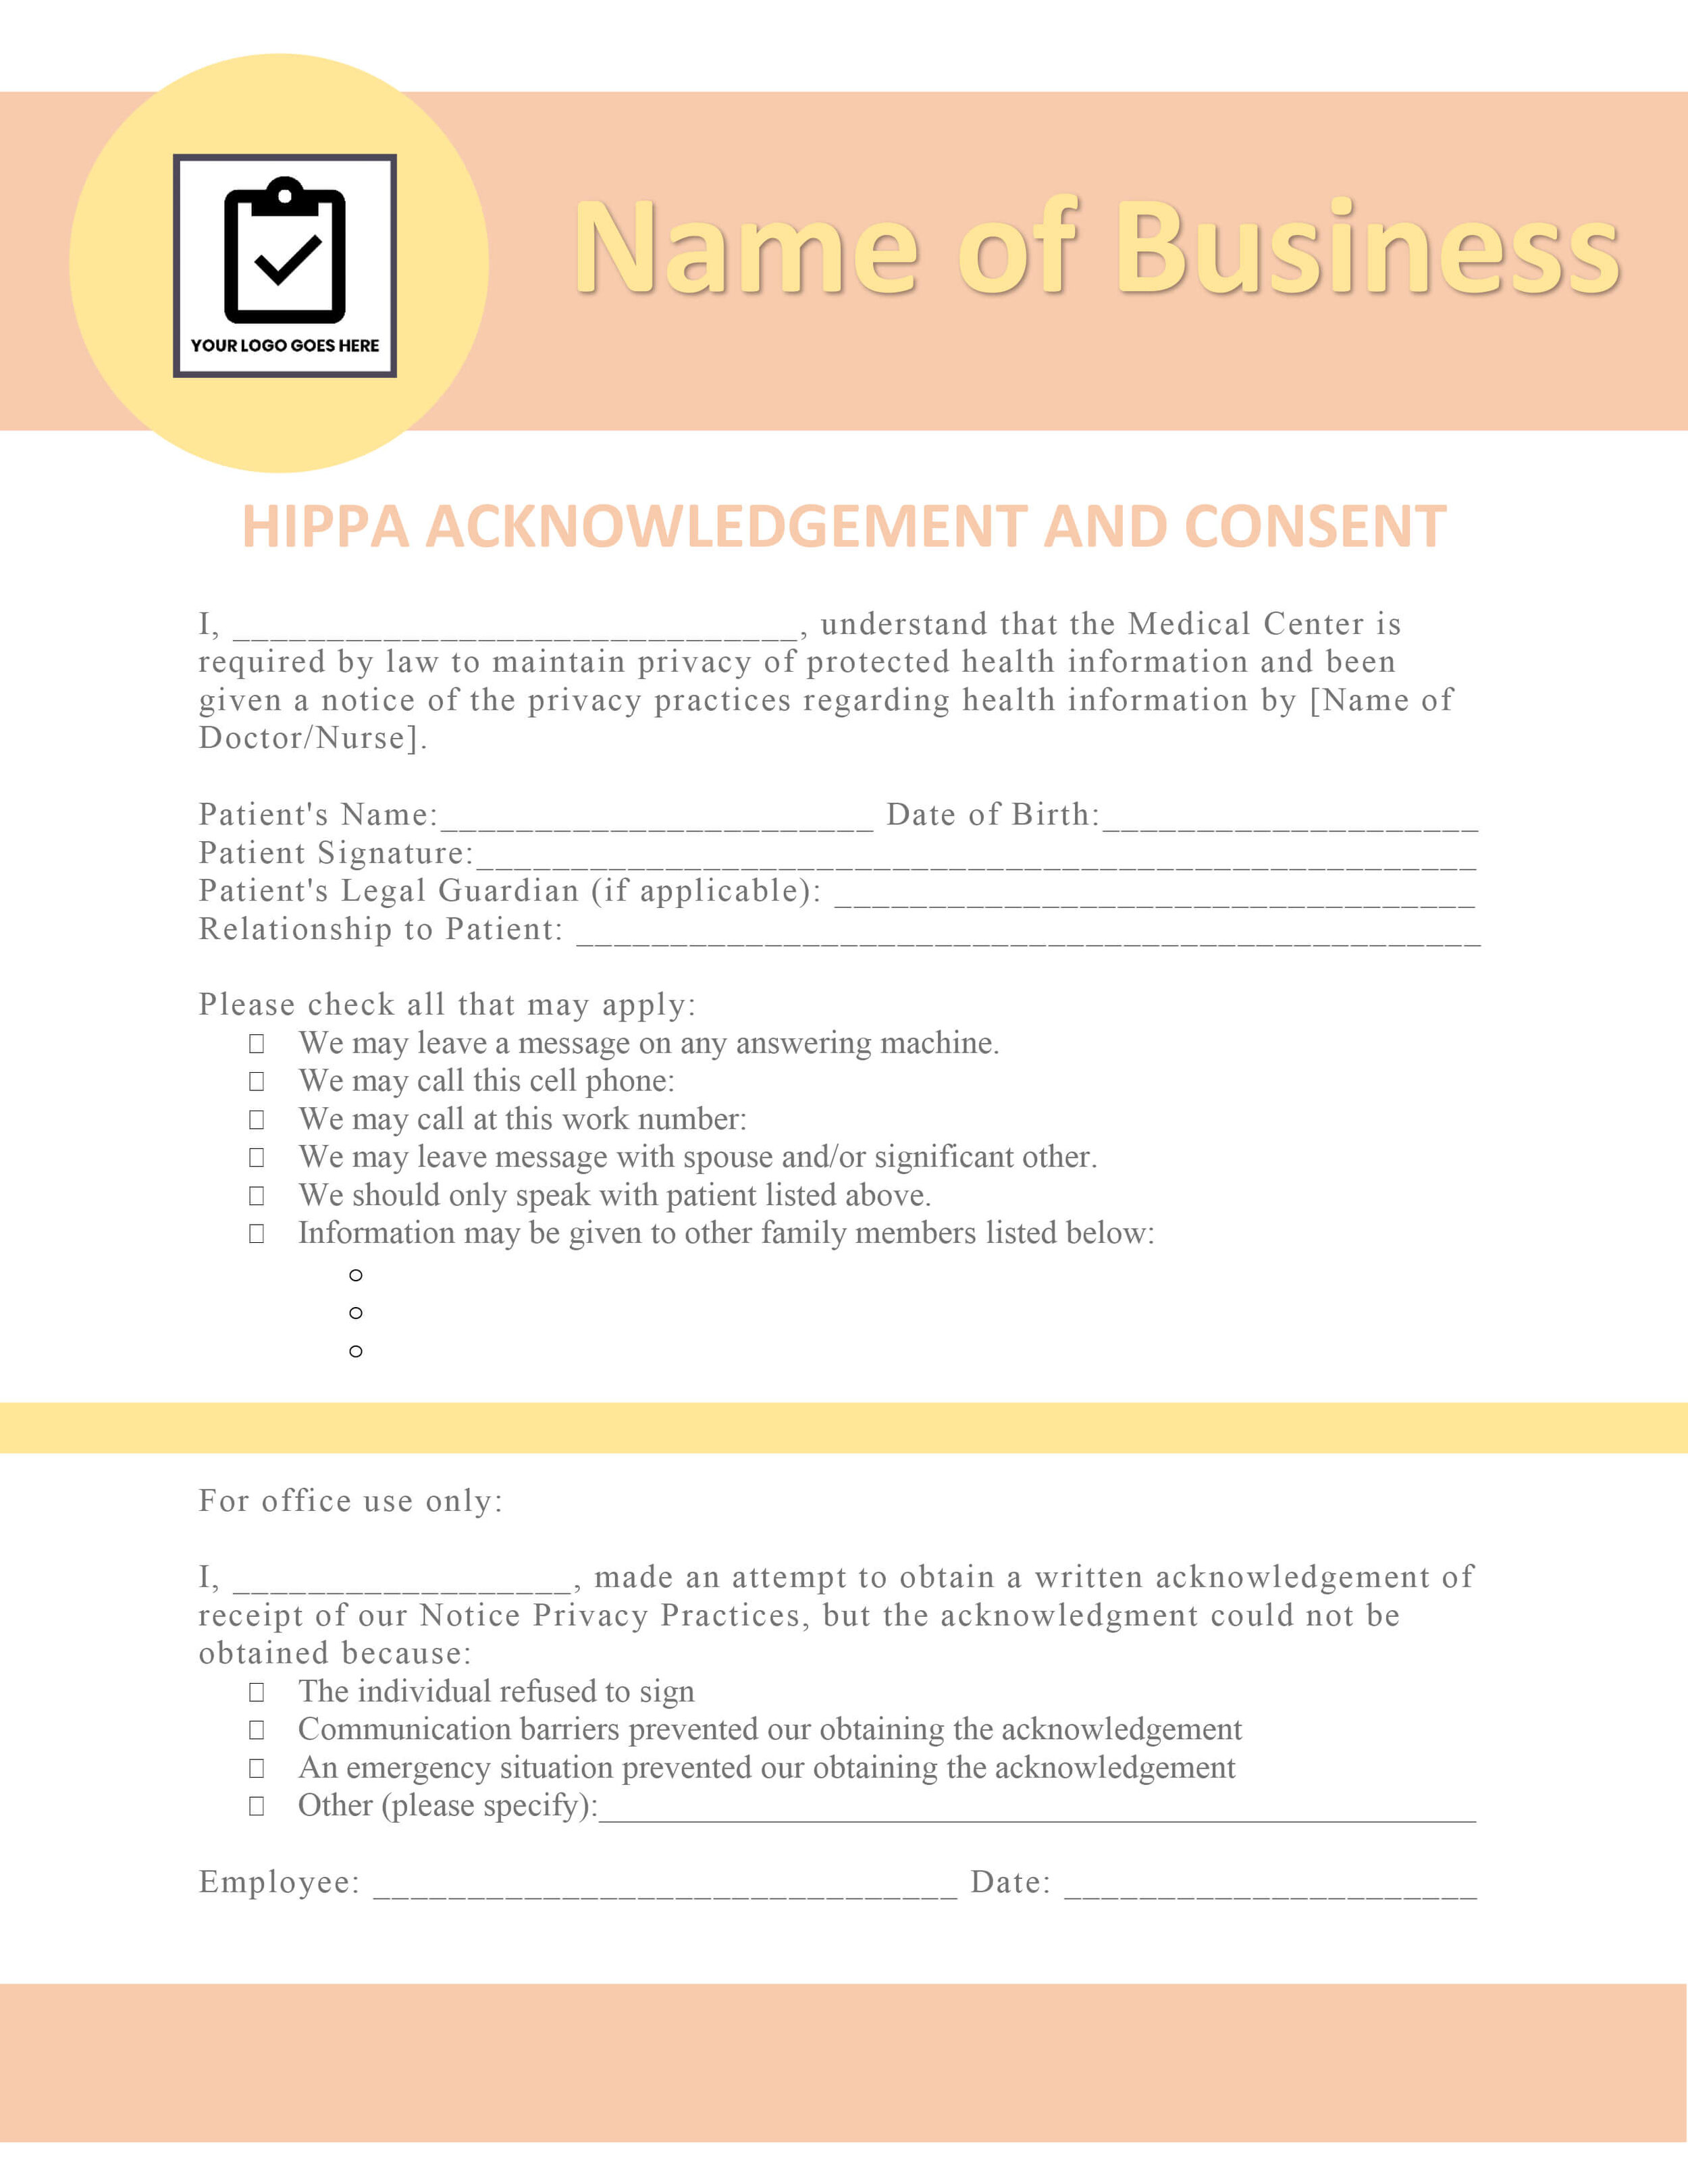 HIPAA consent forms-4.jpg